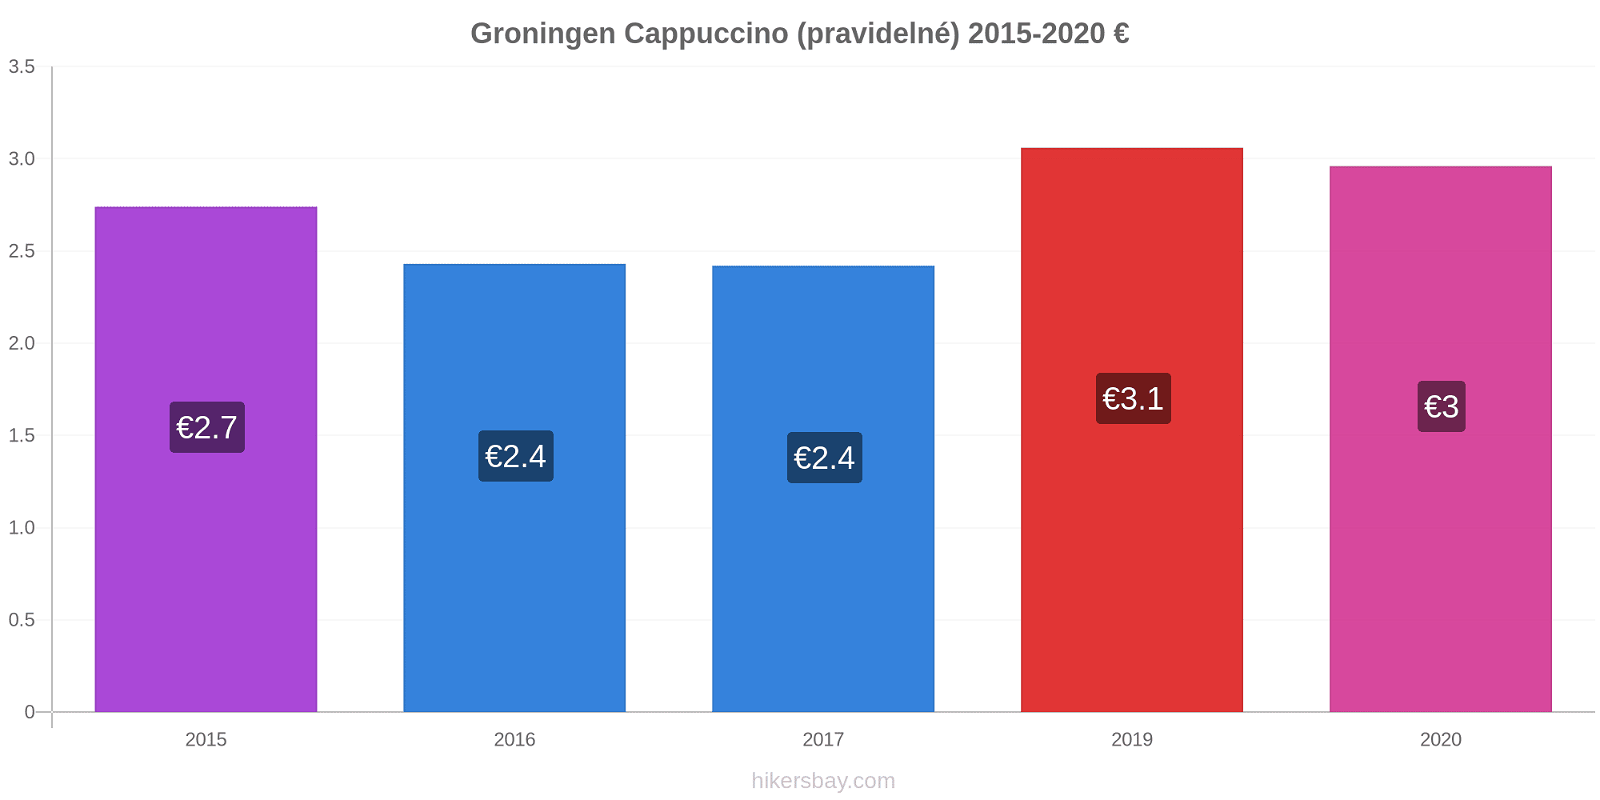 Groningen změny cen Cappuccino (pravidelné) hikersbay.com